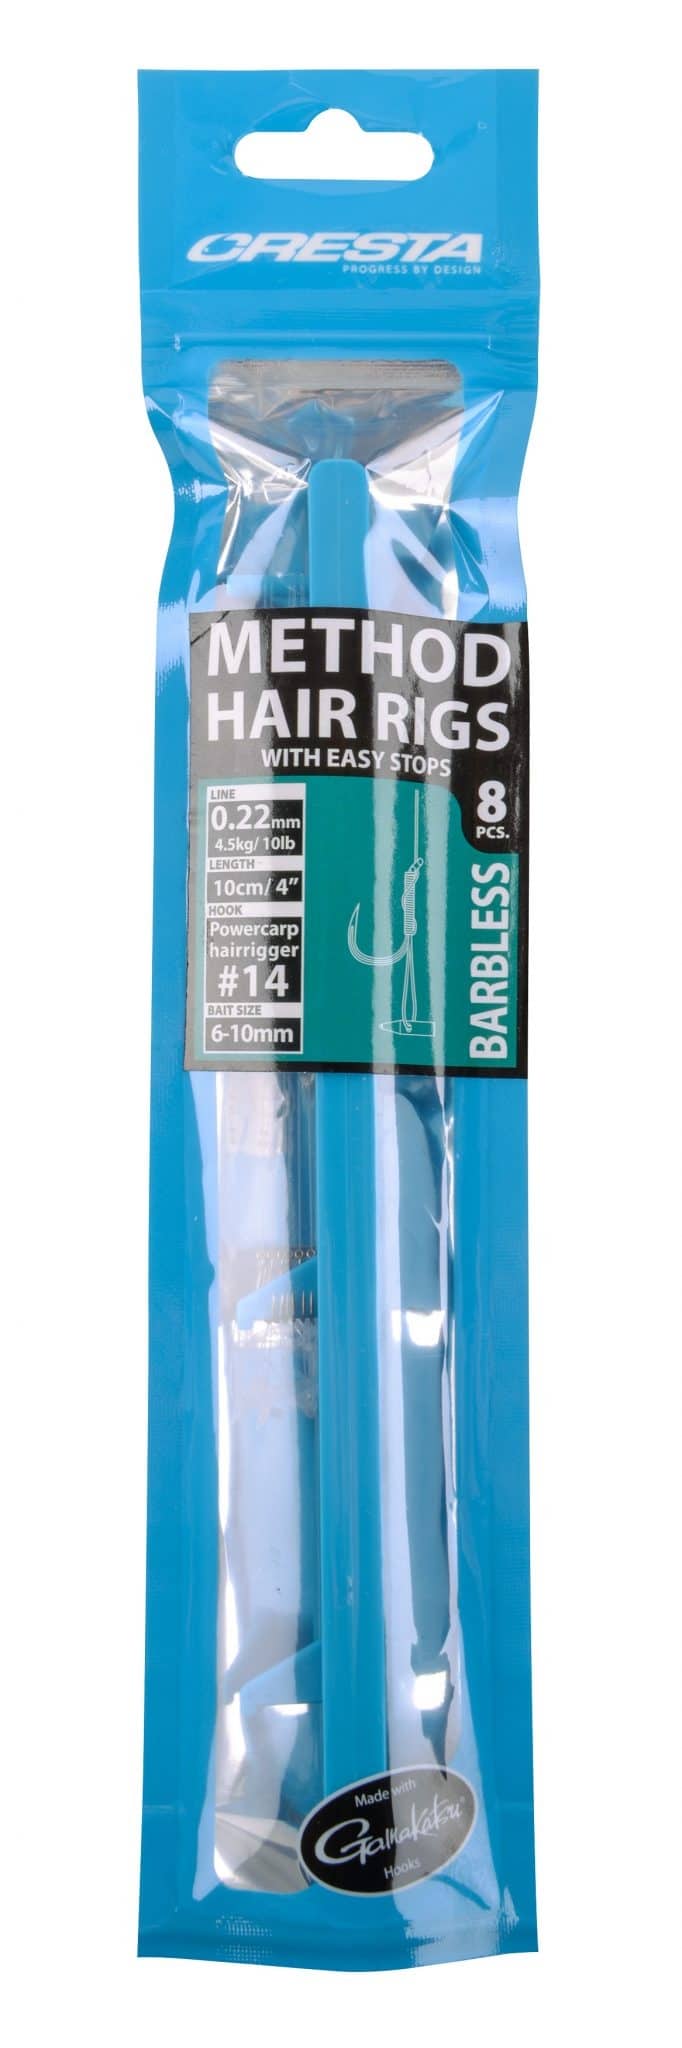 Cresta Method Hair Rigs + Stop Barbless